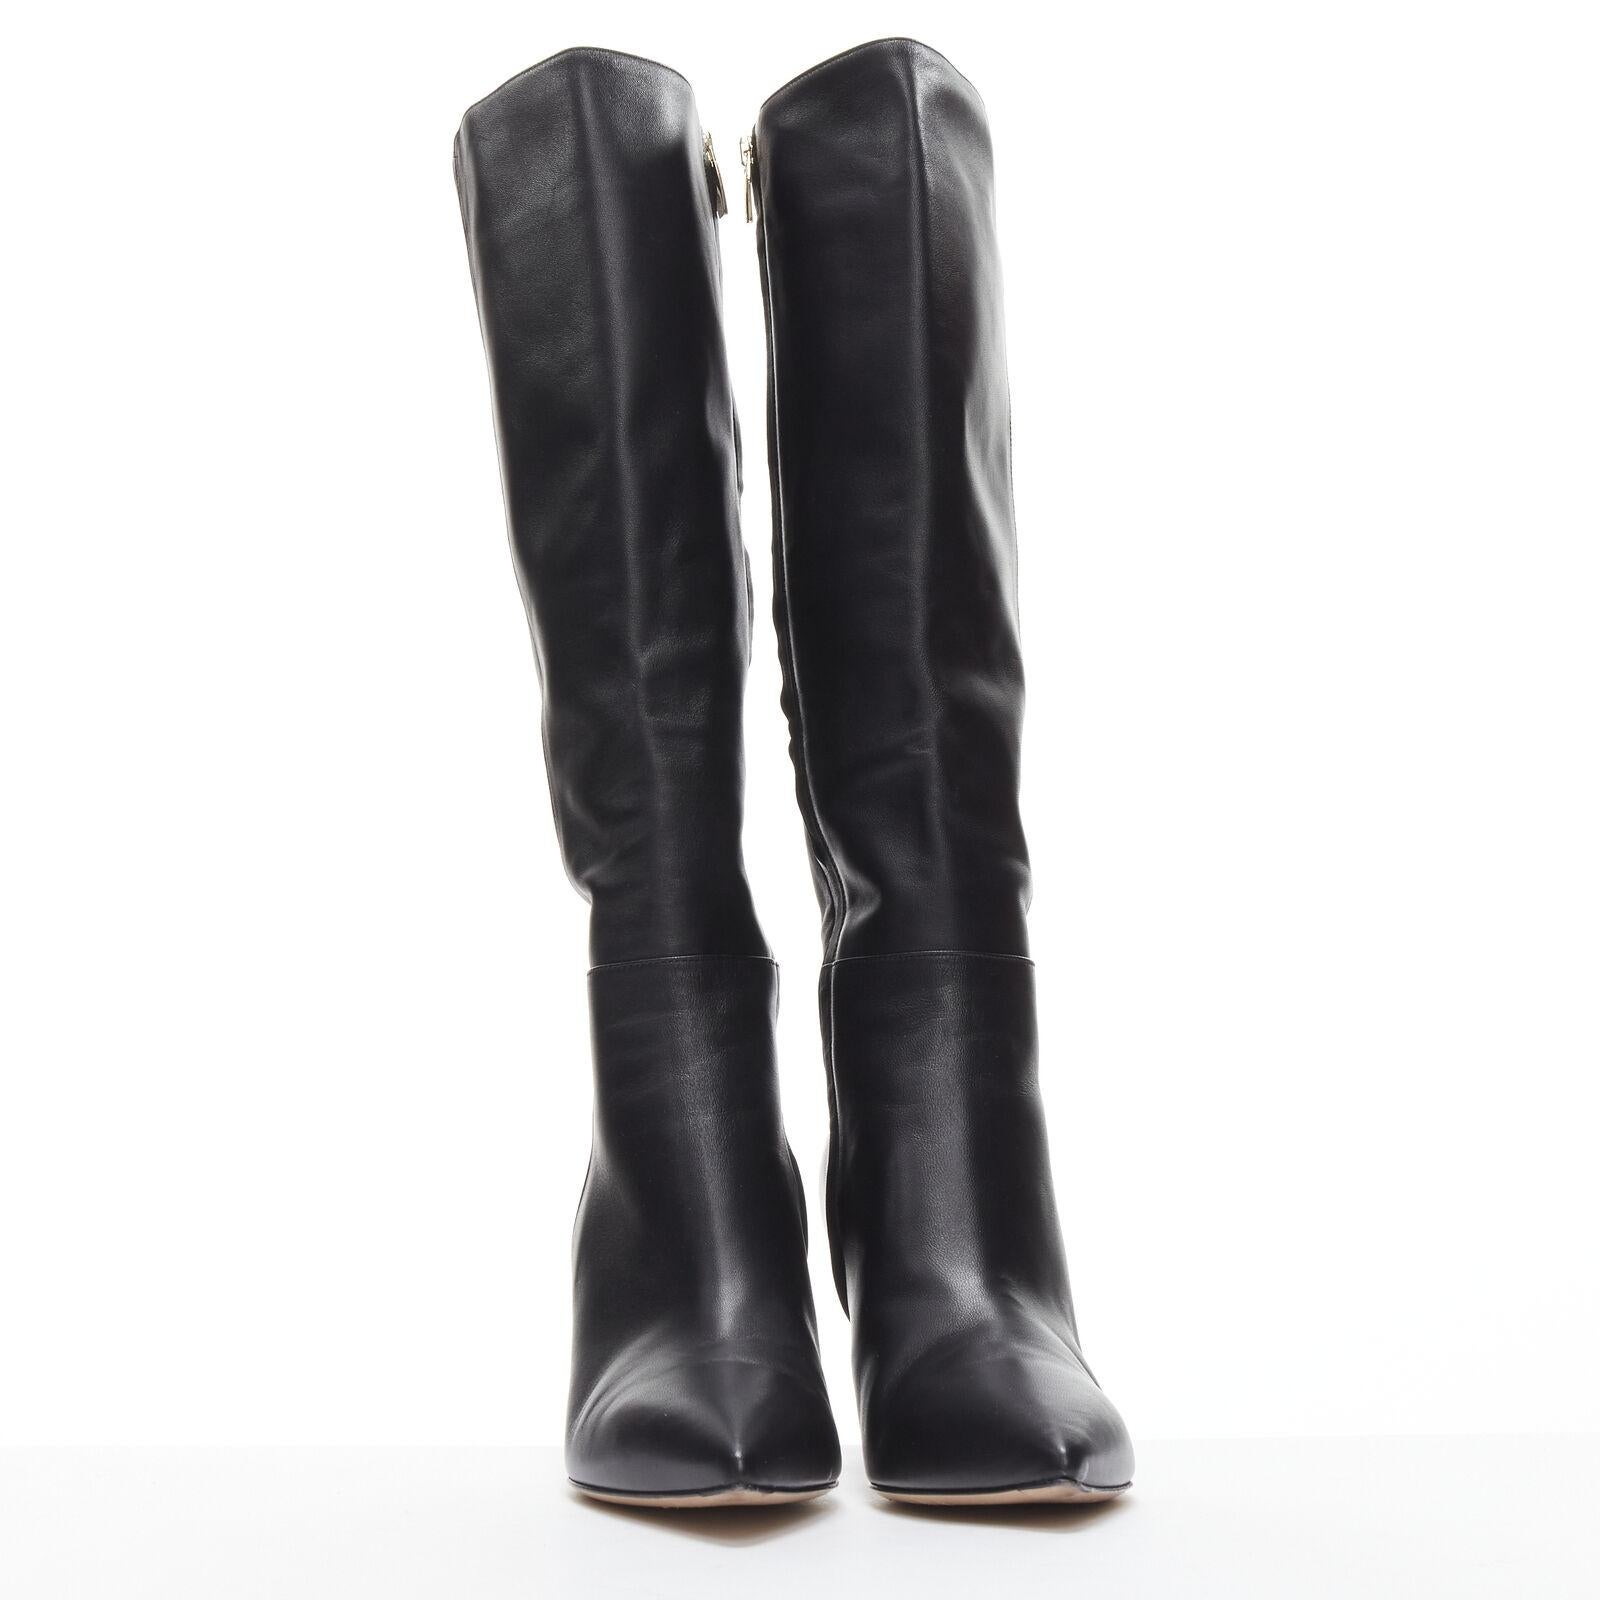 Women's GIANVITO ROSSI black leather point toe spool heeled tall boots EU39 US9